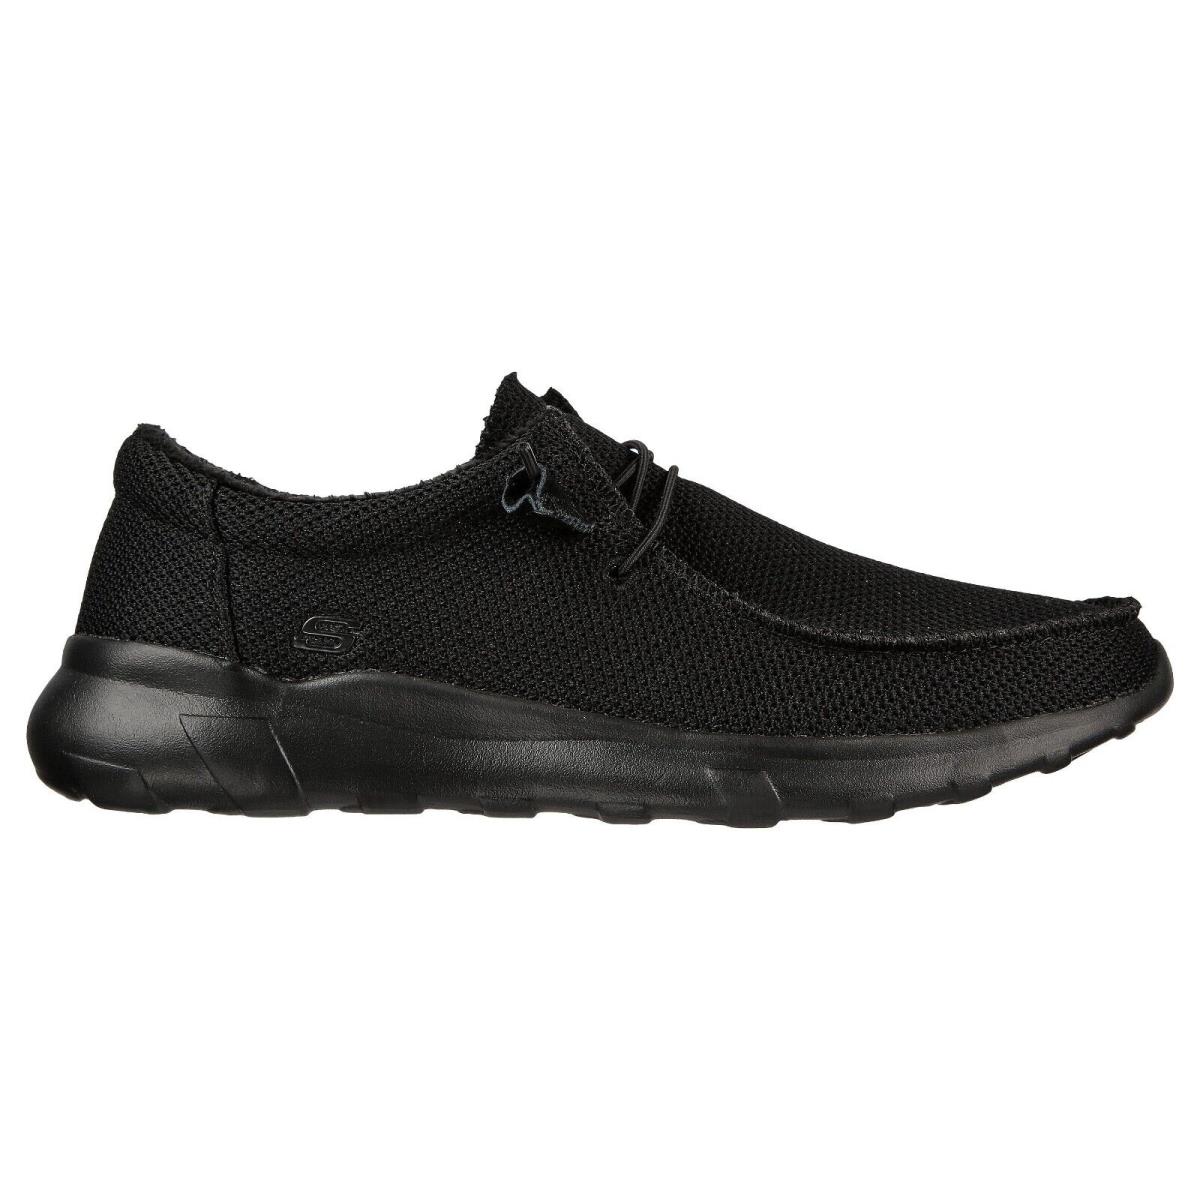 Skechers shoes Bulger Zenwick - Black 8